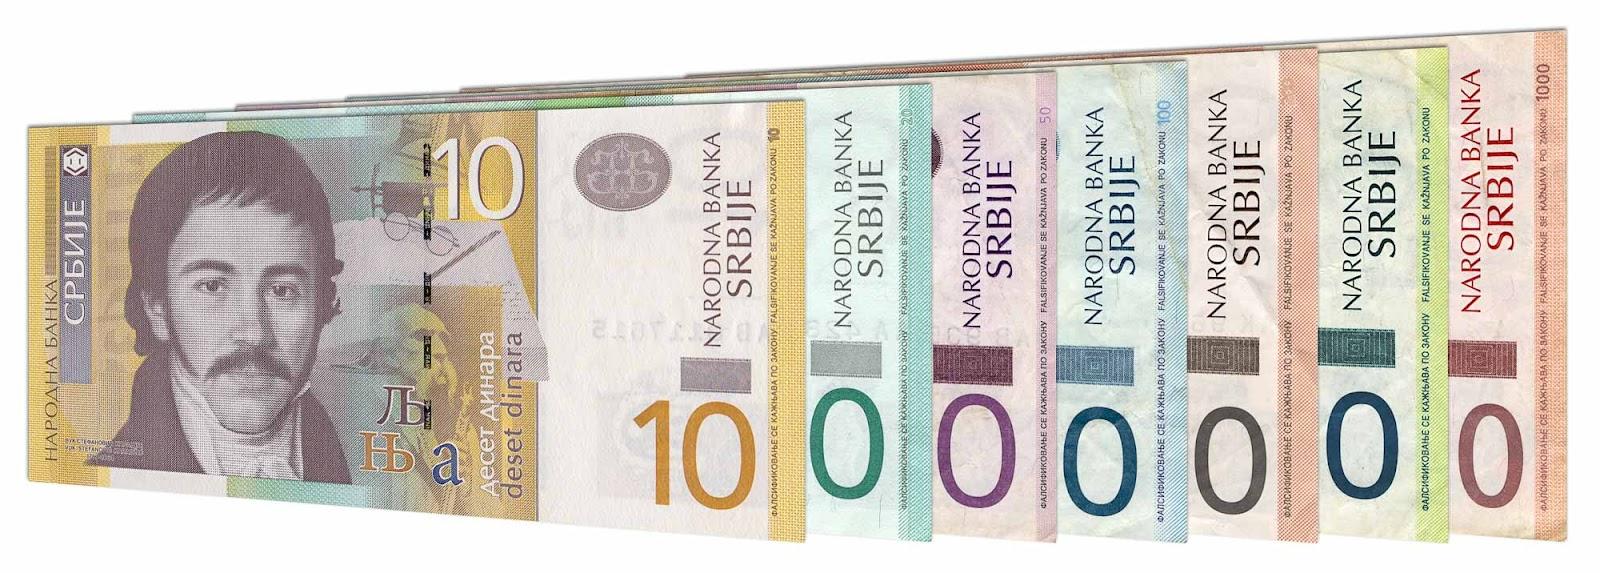 Serbian Dinar banknote series